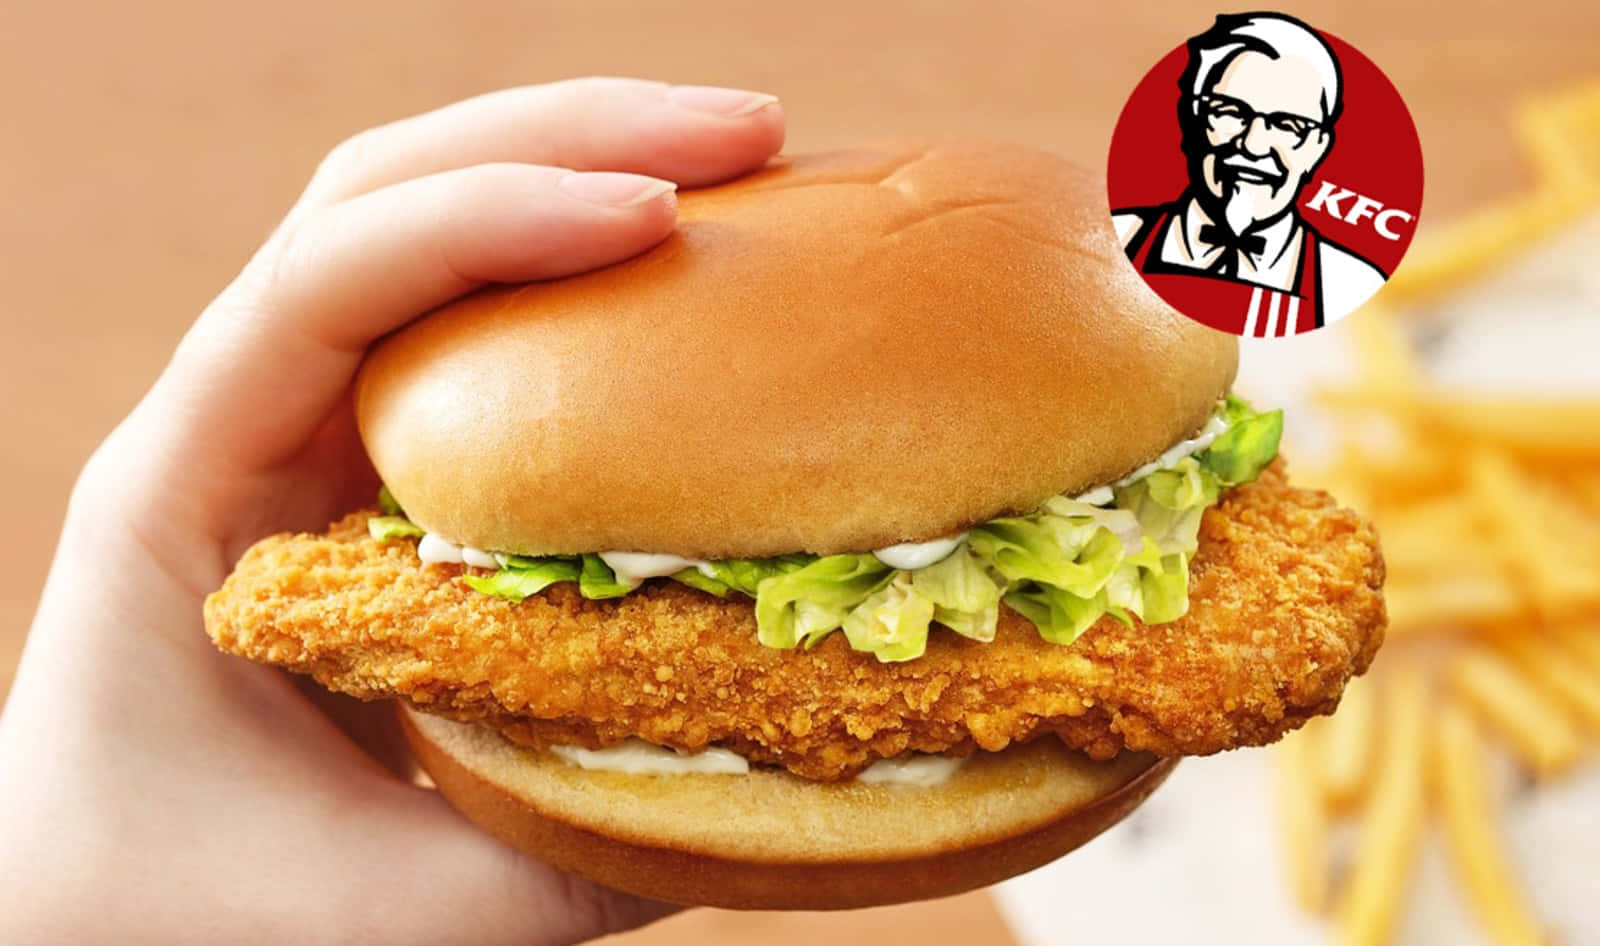 Enjoy the flavour of KFC